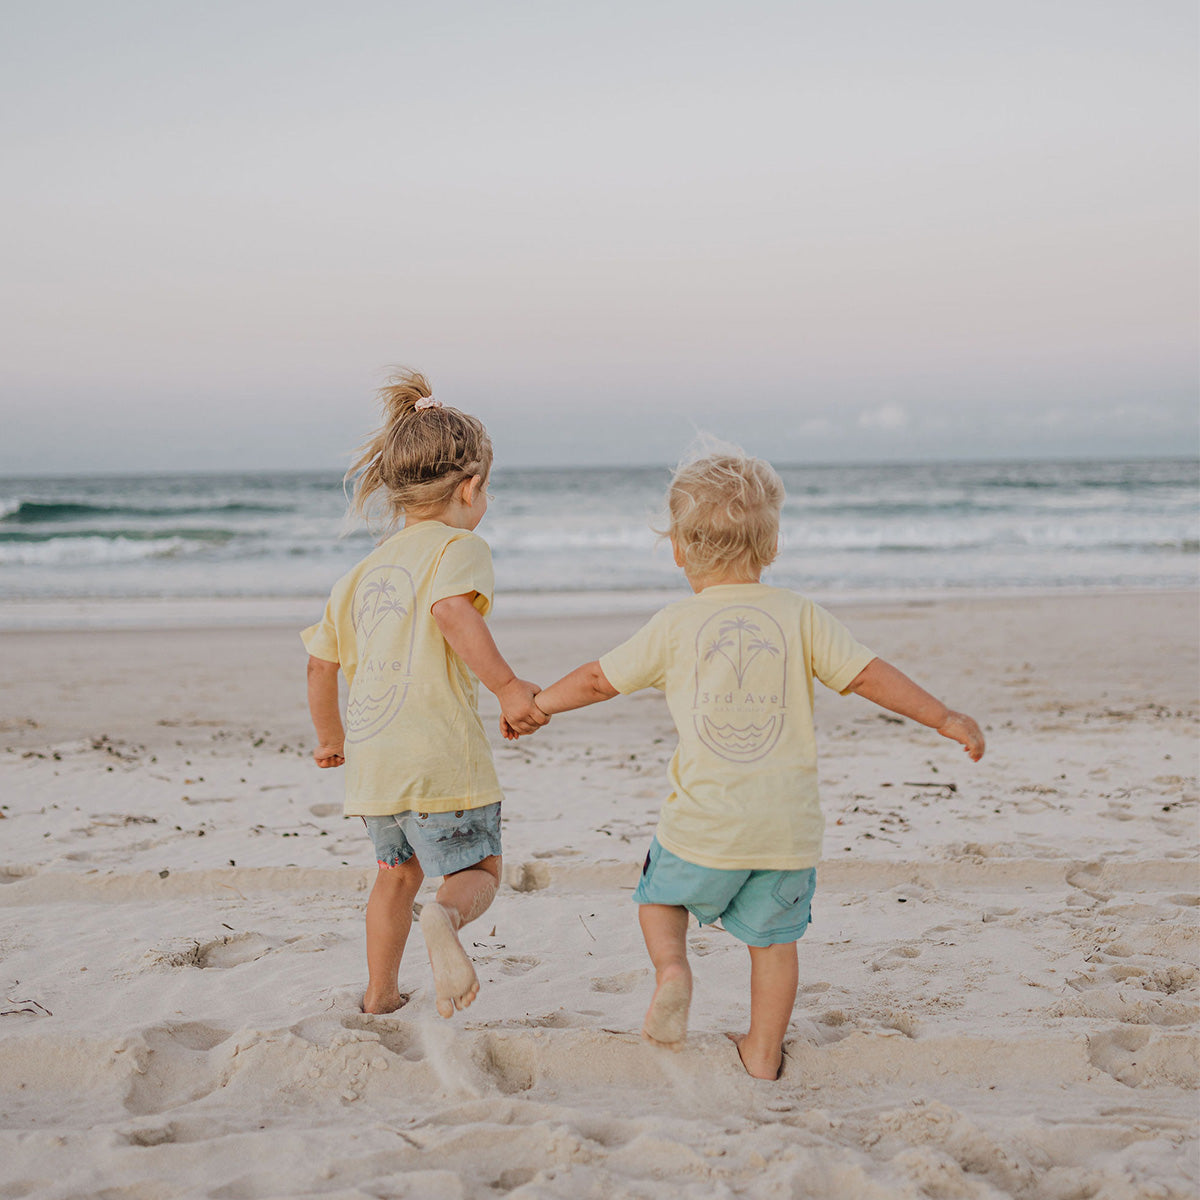 Family-beach-days-beach-hire-for-kids-Gold-Coast.jpg